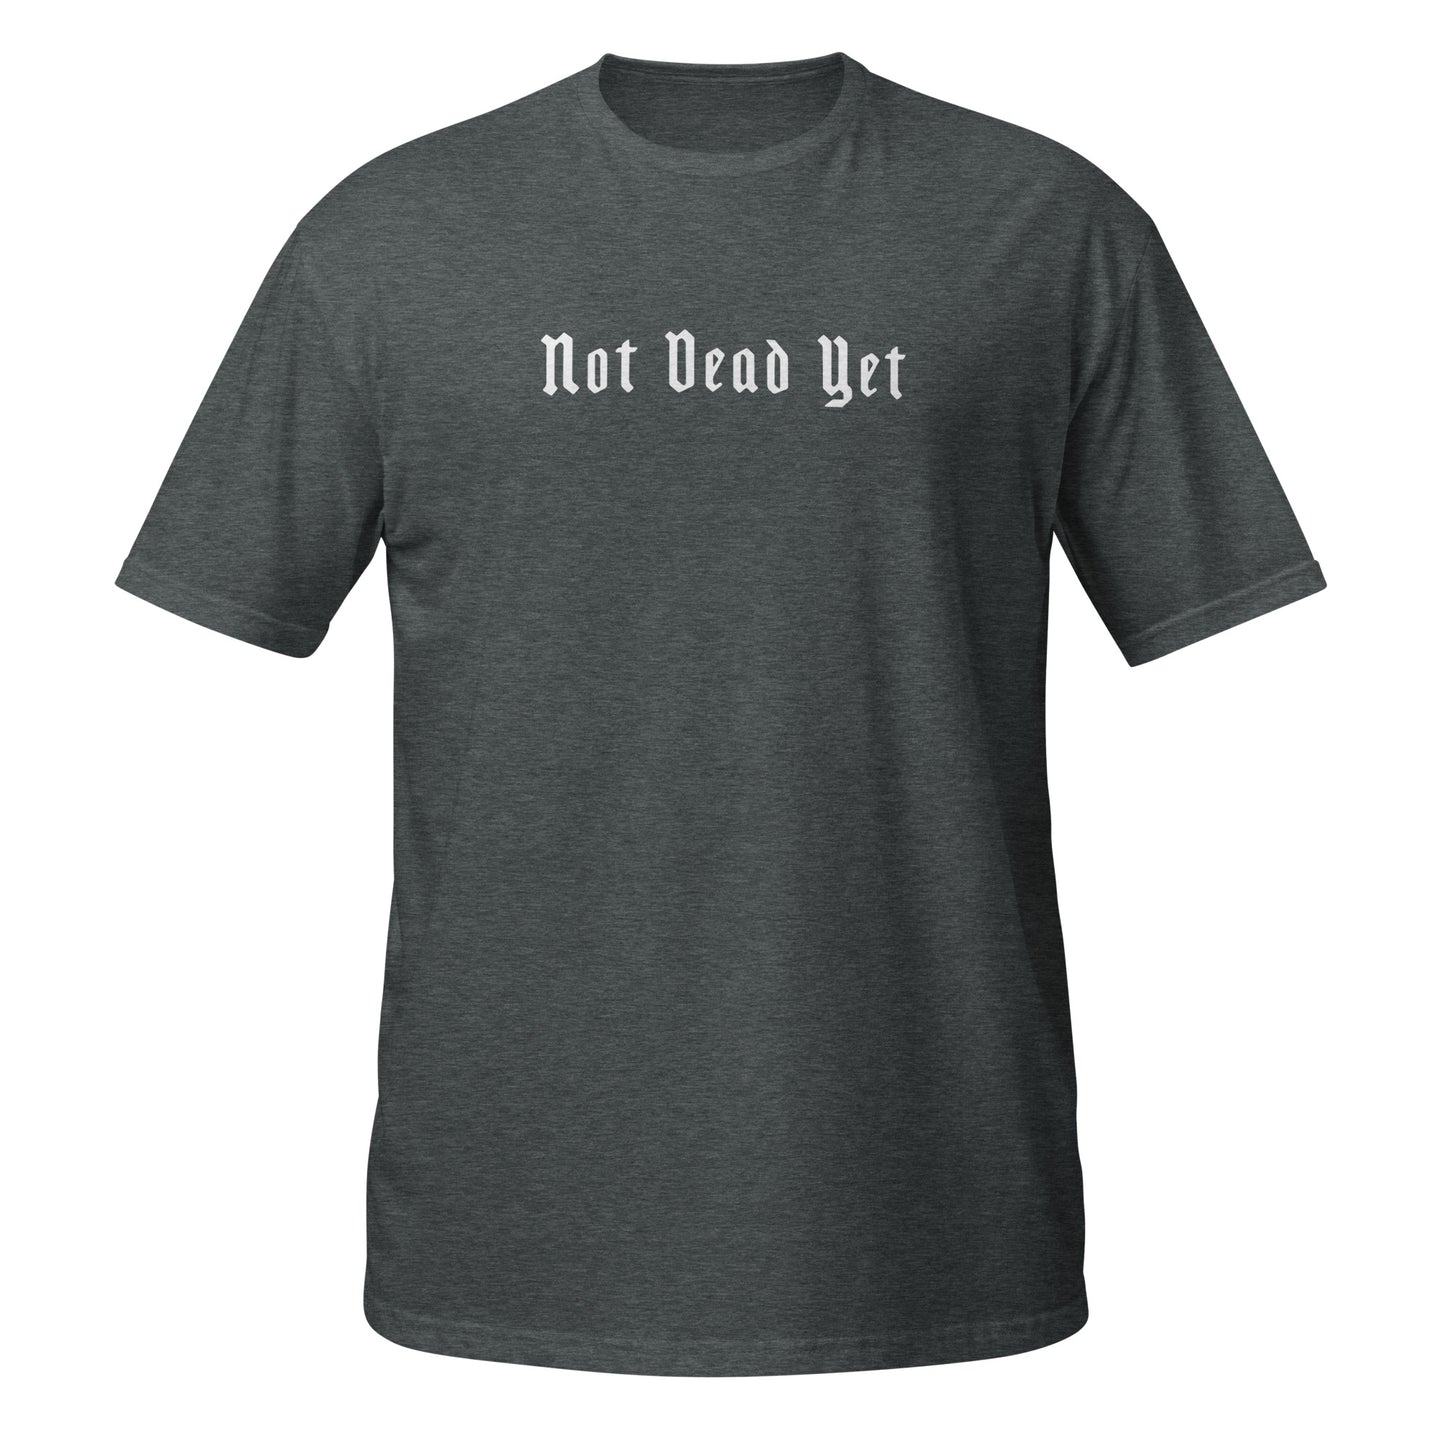 "Not Dead Yet" Short-Sleeve Unisex T-Shirt